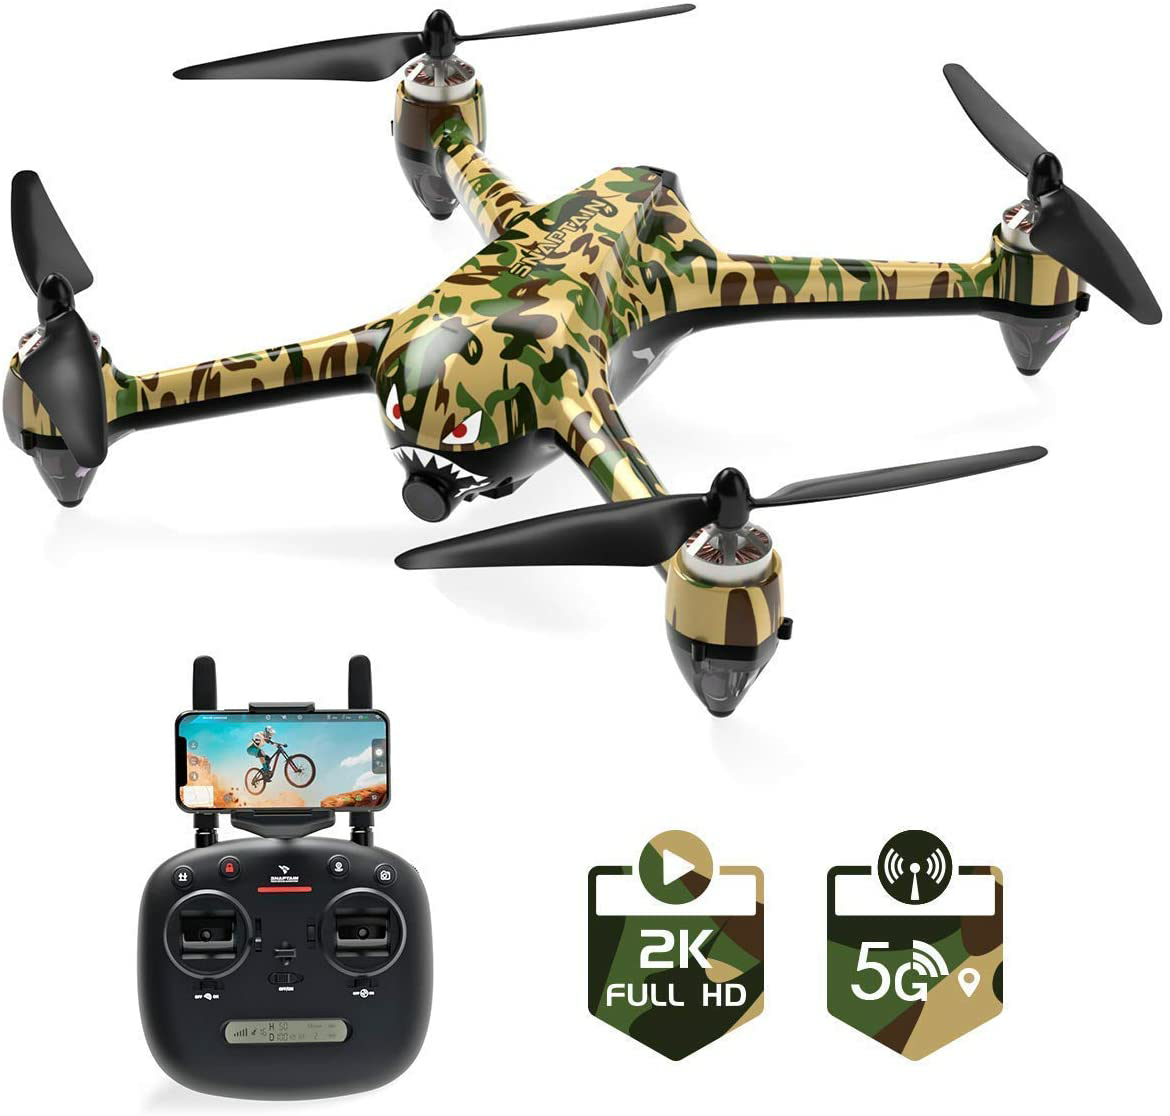 SNAPTAIN SP700 GPS Drone Brushless Motor 5G Wi-Fi 2K Camera Live Video GPS $110